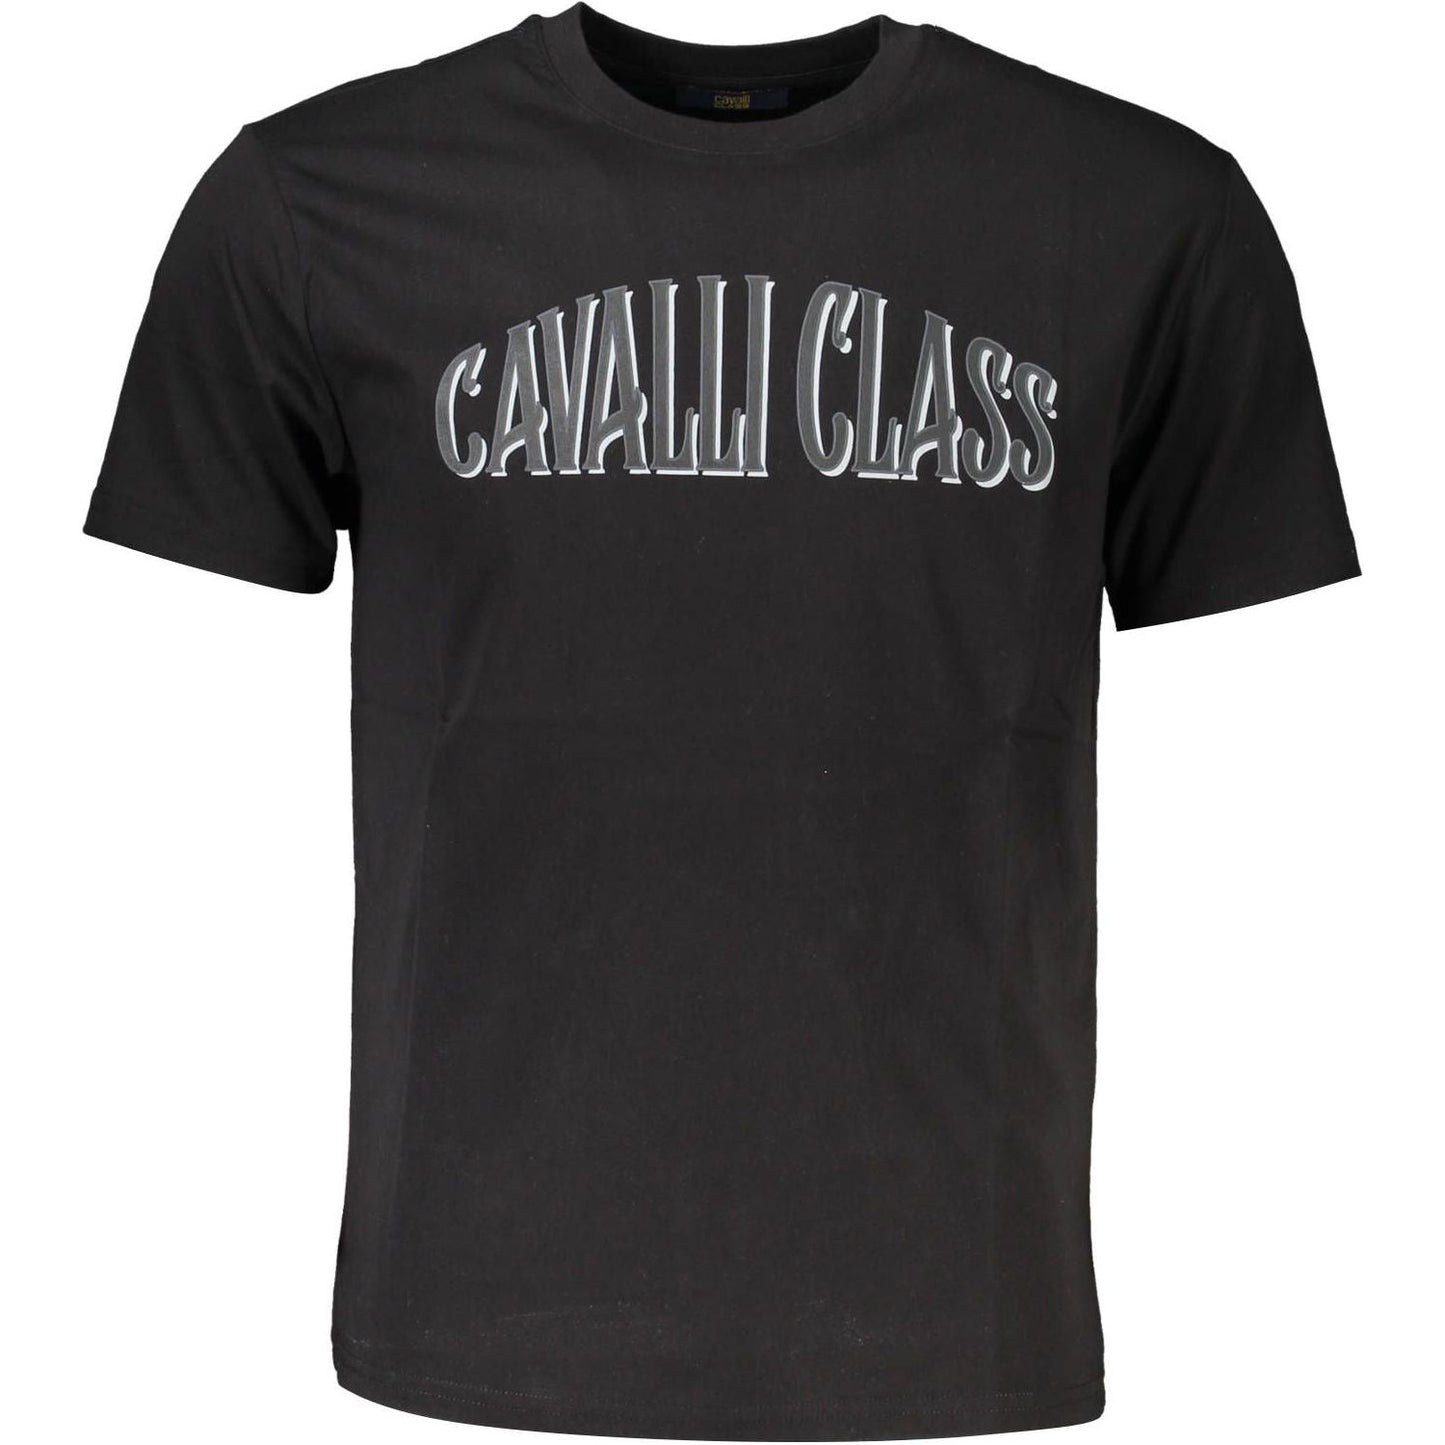 Cavalli Class Elegant Cavalli Class Cotton Tee elegant-cavalli-class-cotton-tee